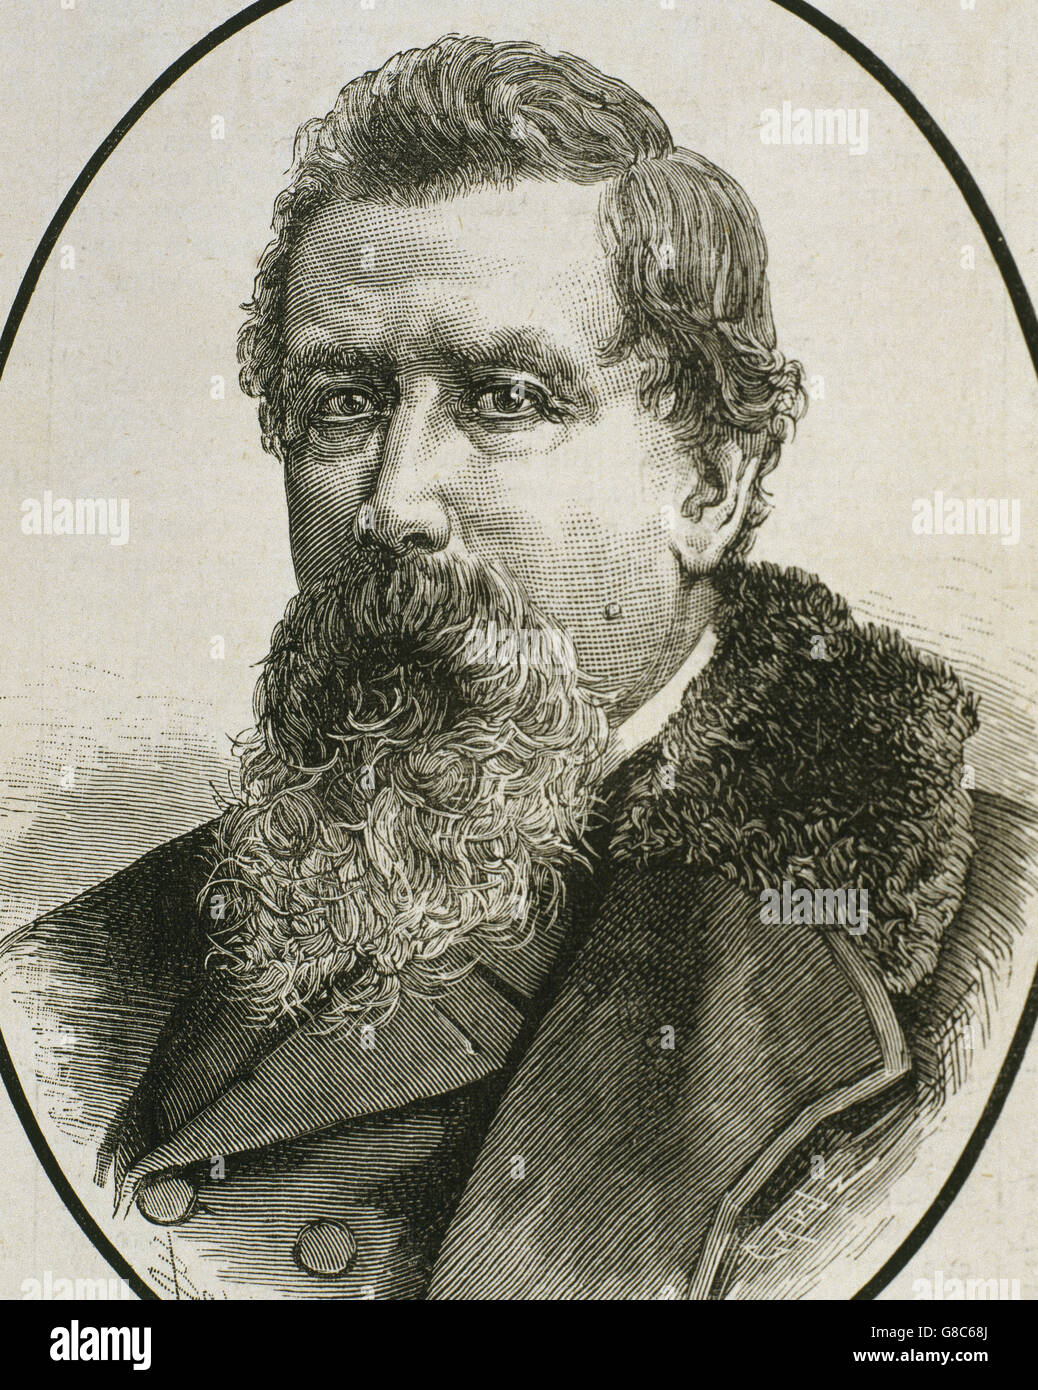 Amilcare Ponchielli (1834-1886). Italienischer Komponist. Porträt. Gravur. Stockfoto